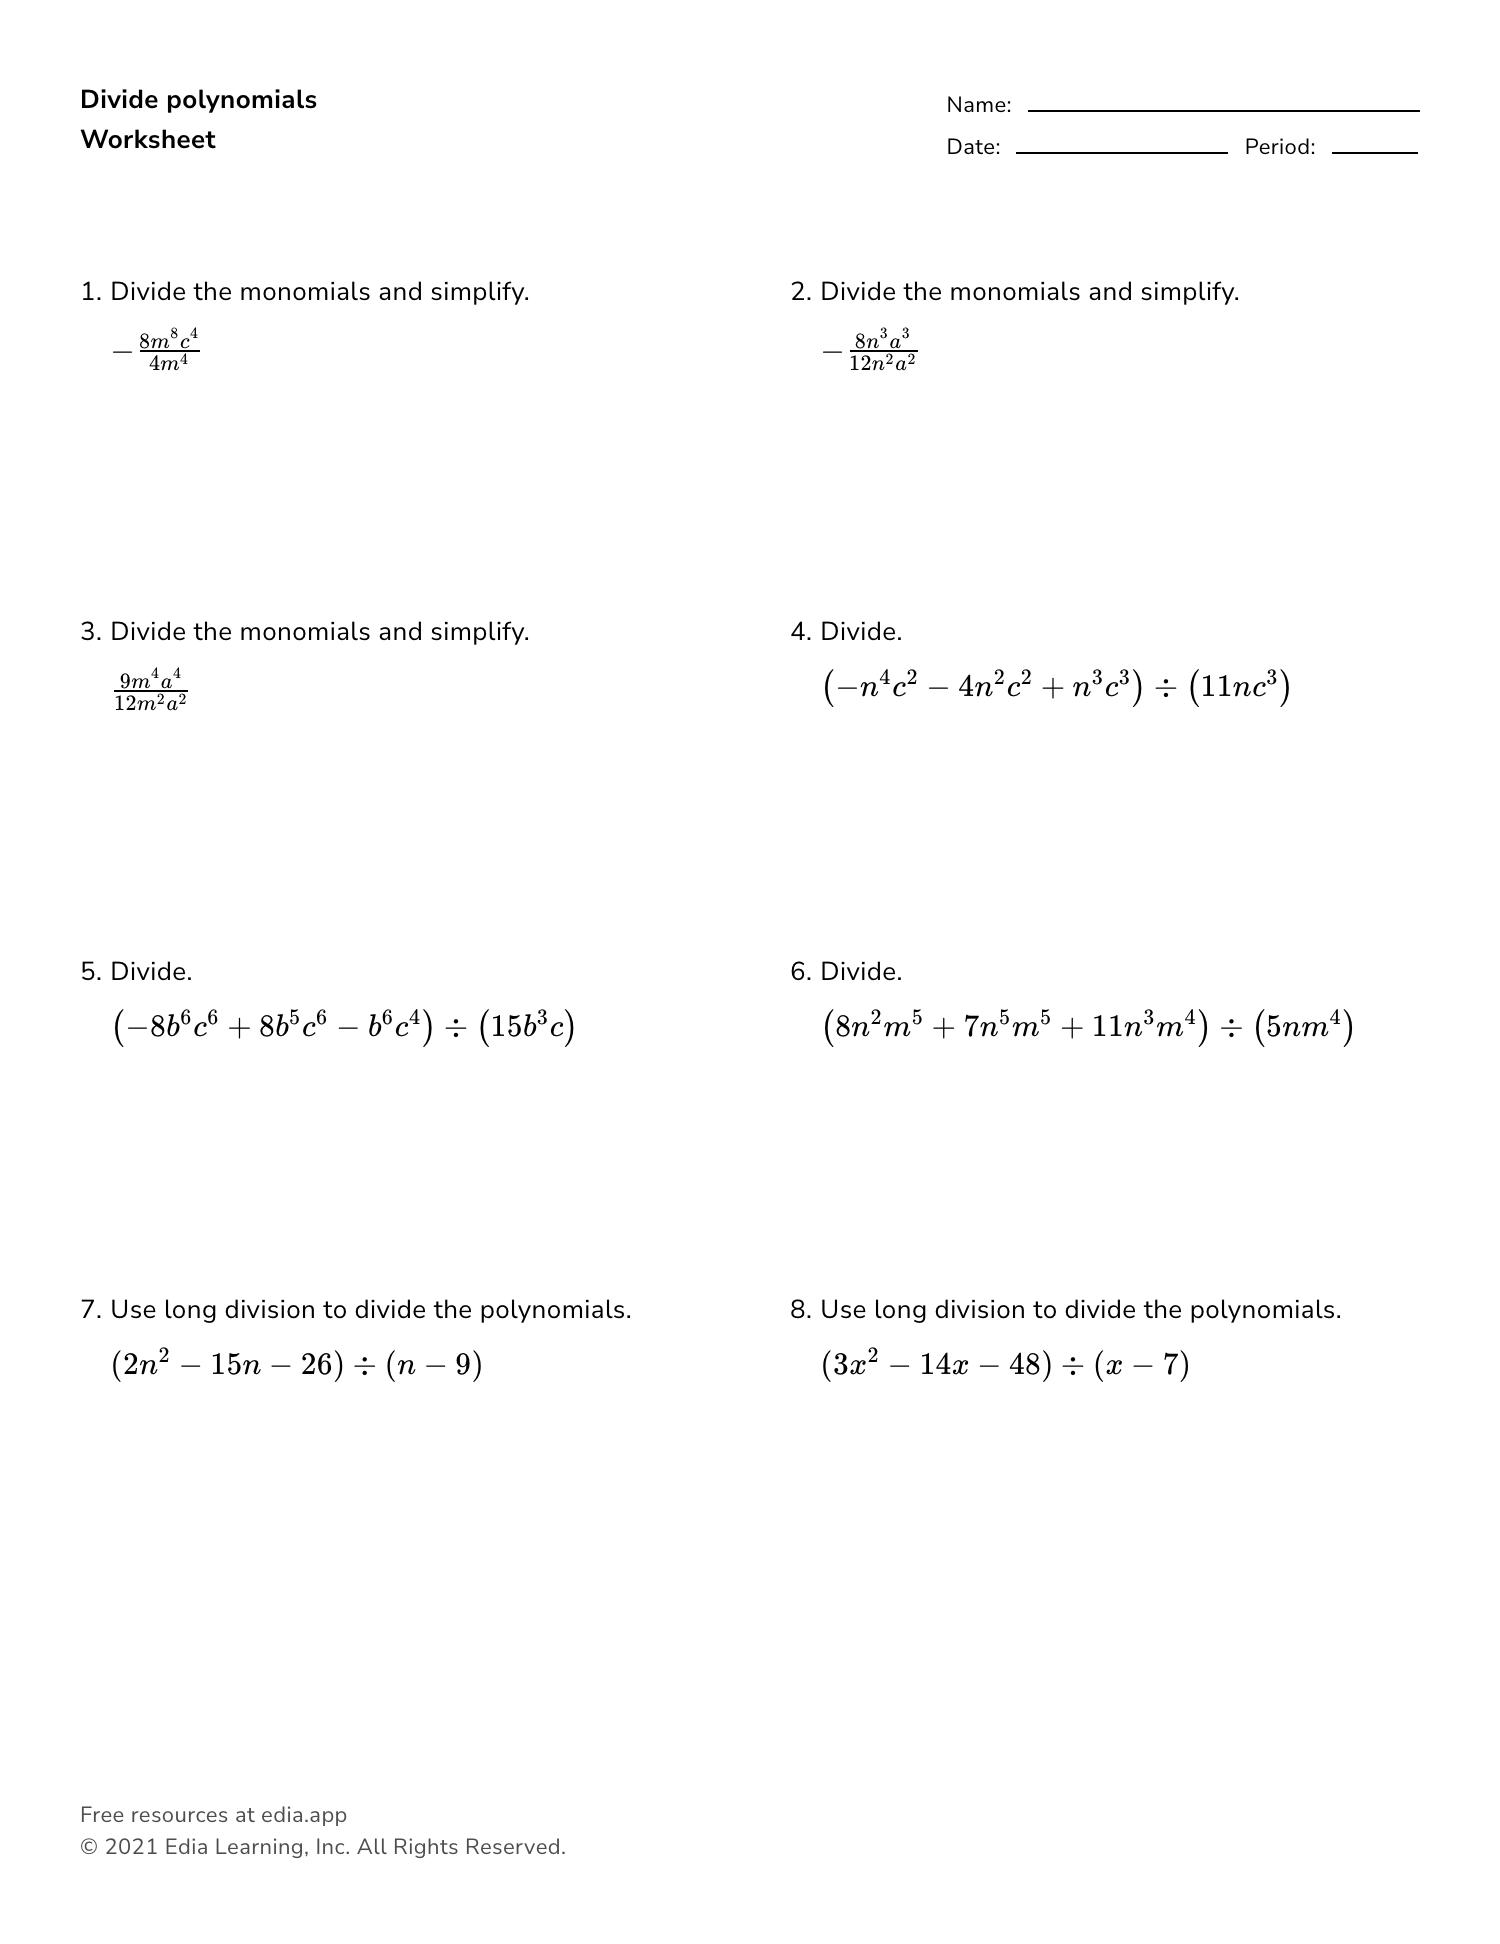 long-division-of-polynomials-worksheet